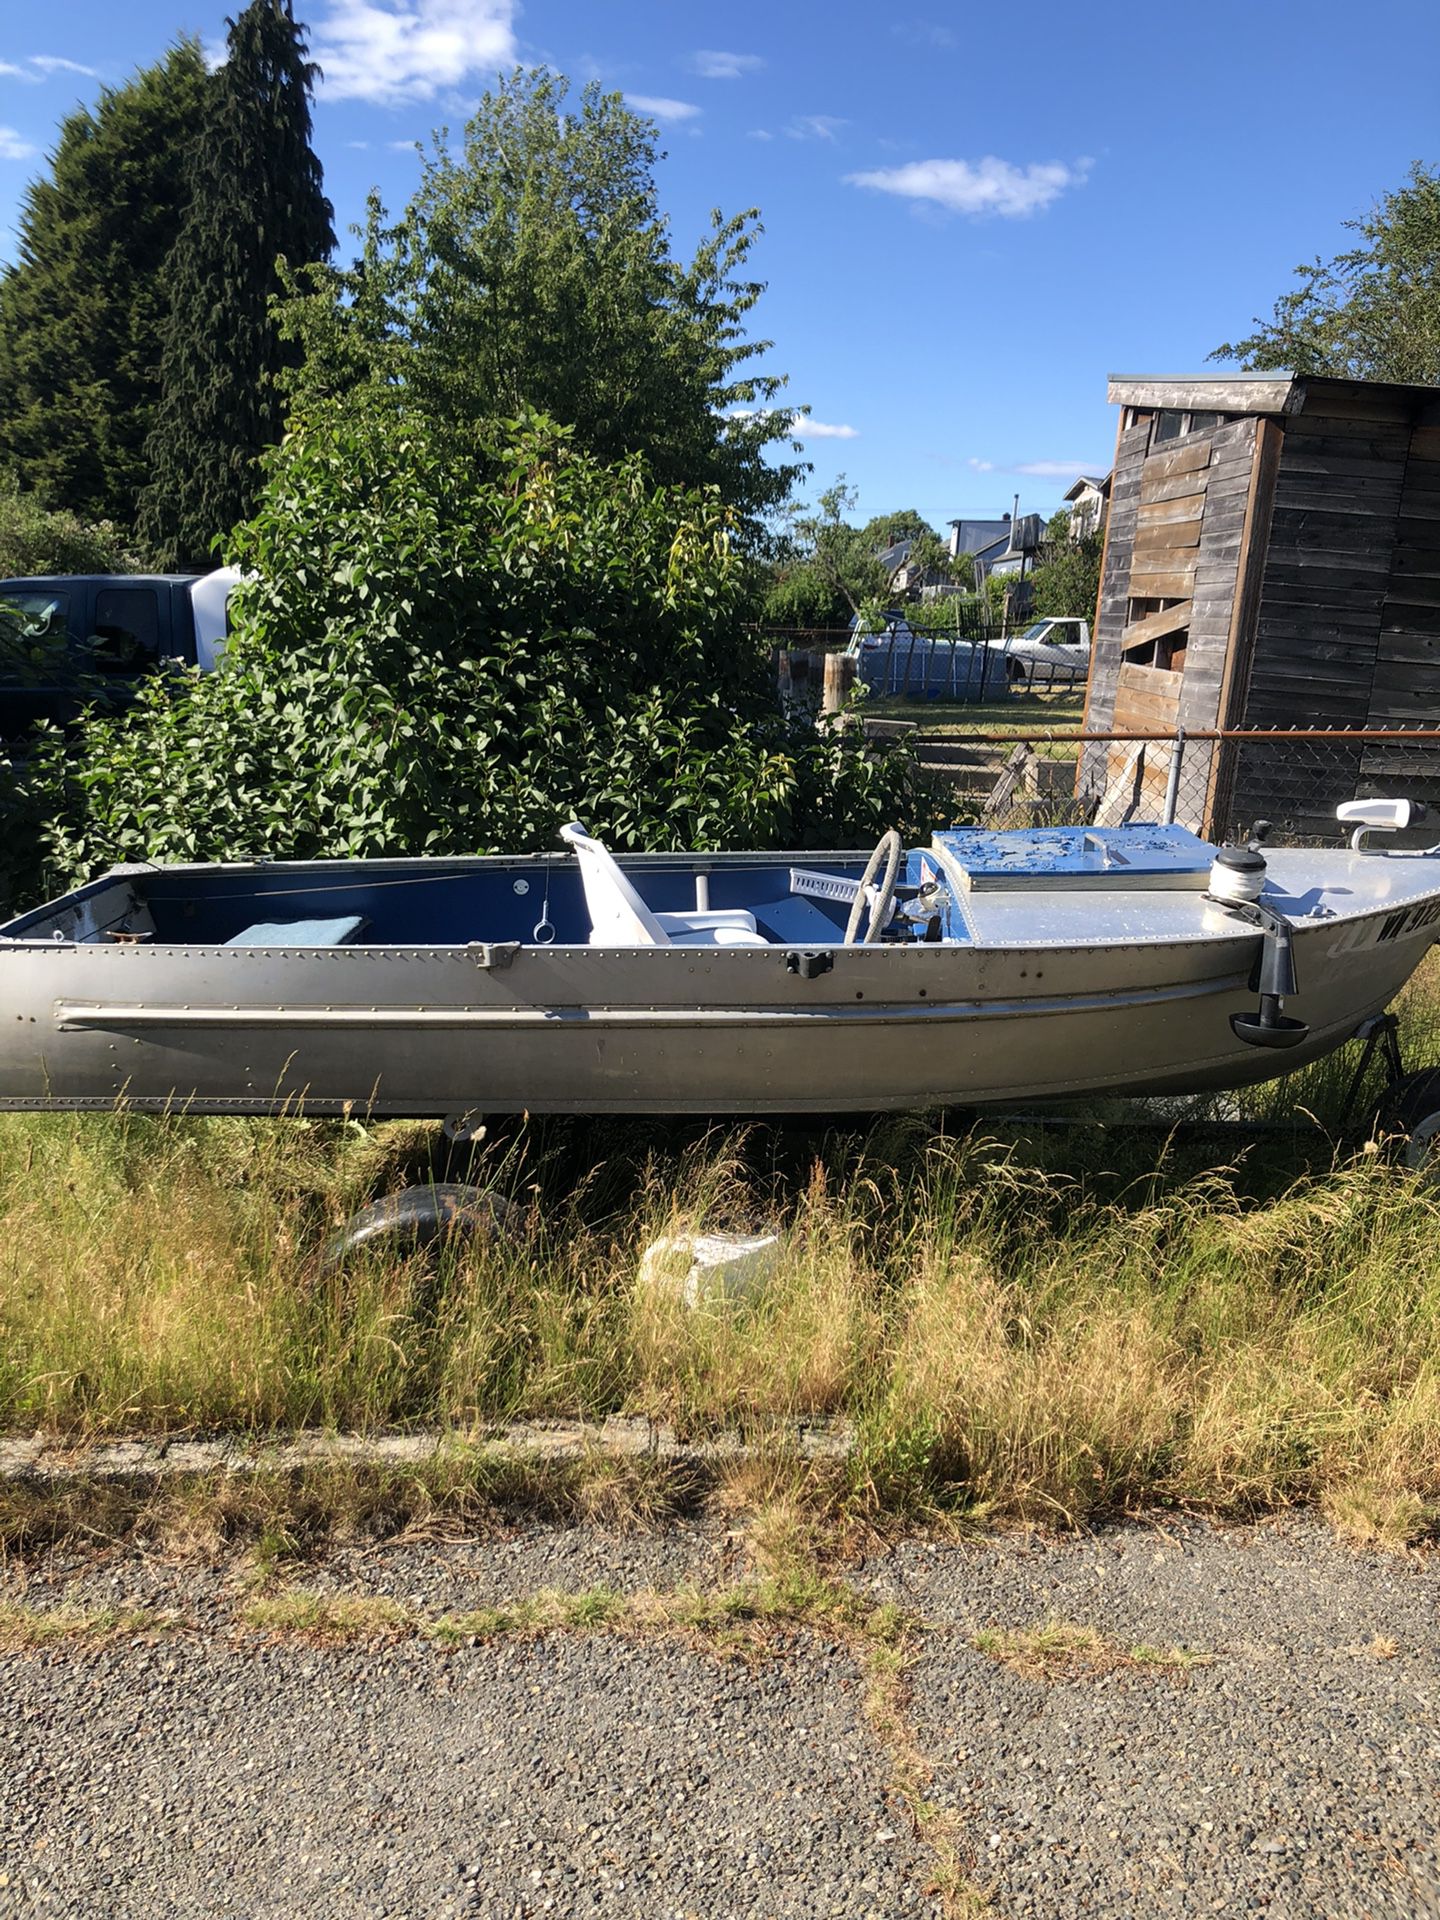 12’ Aluminum Boat With Trailer